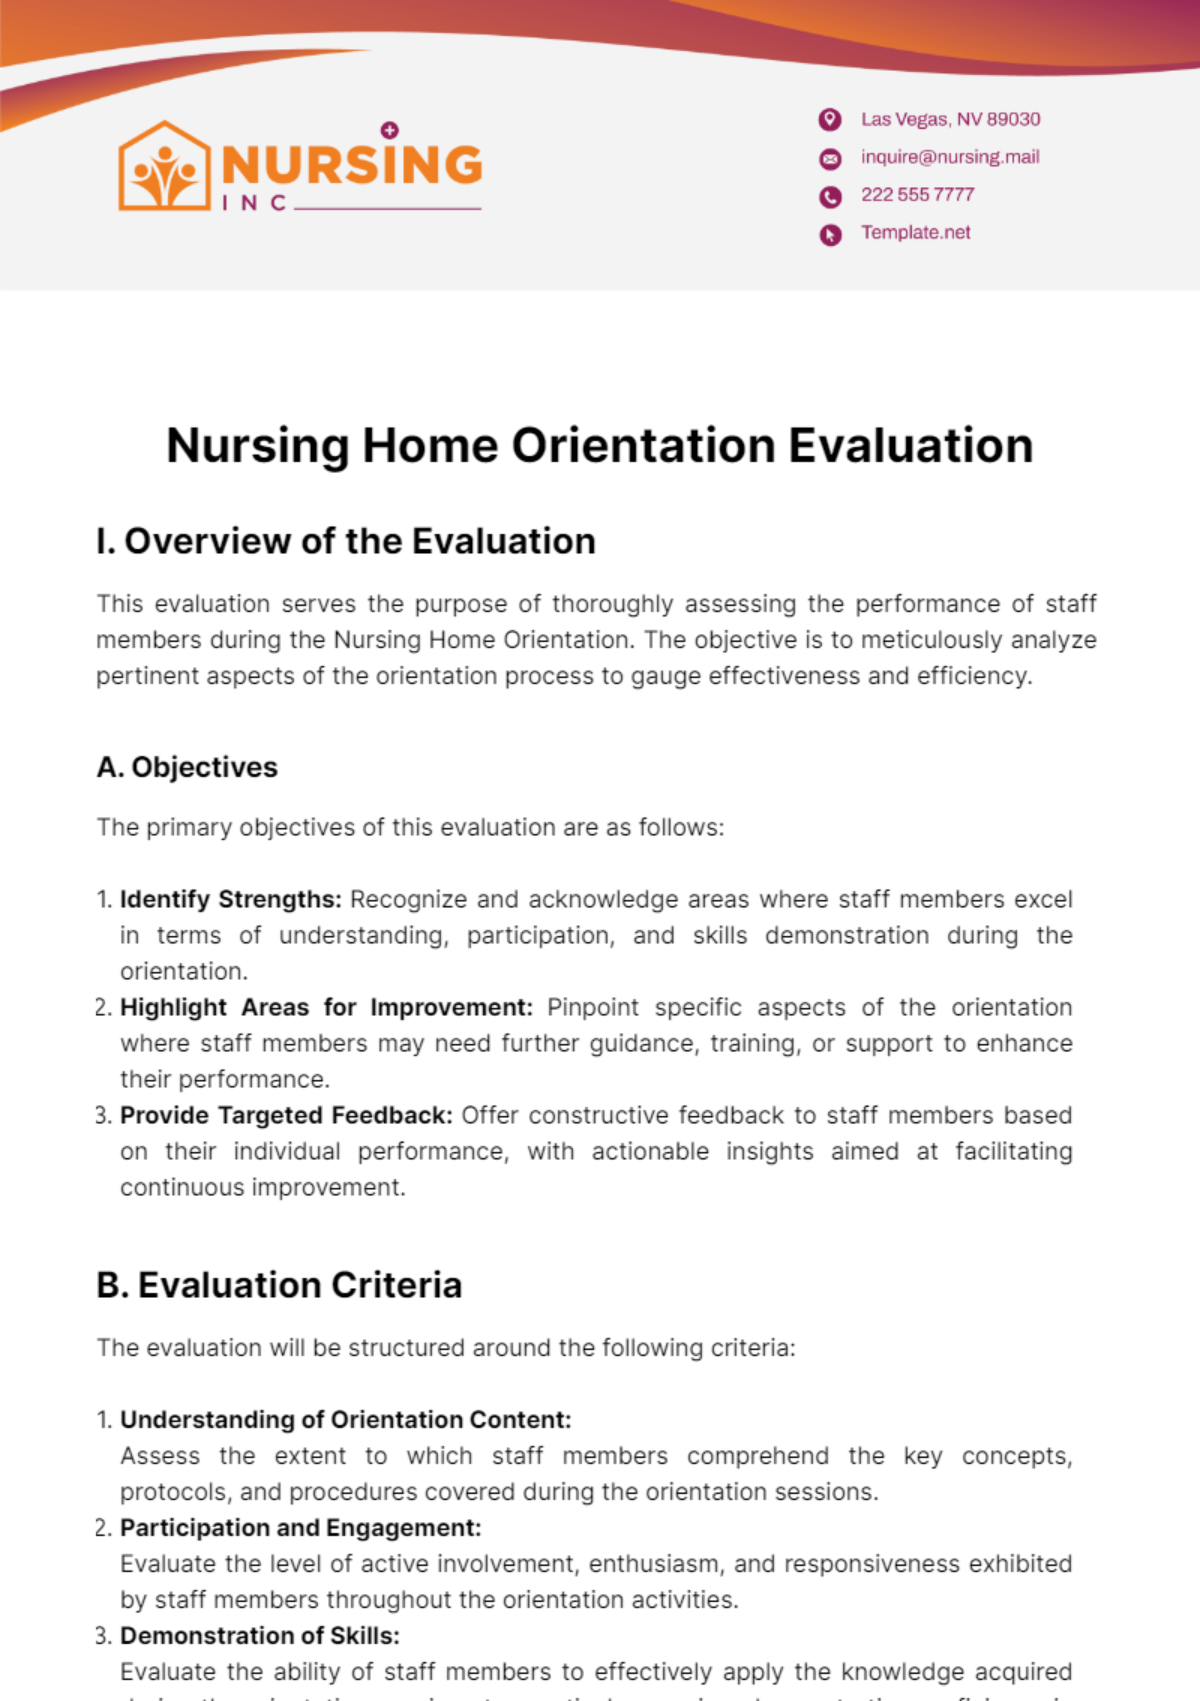 Nursing Home Orientation Evaluation Template